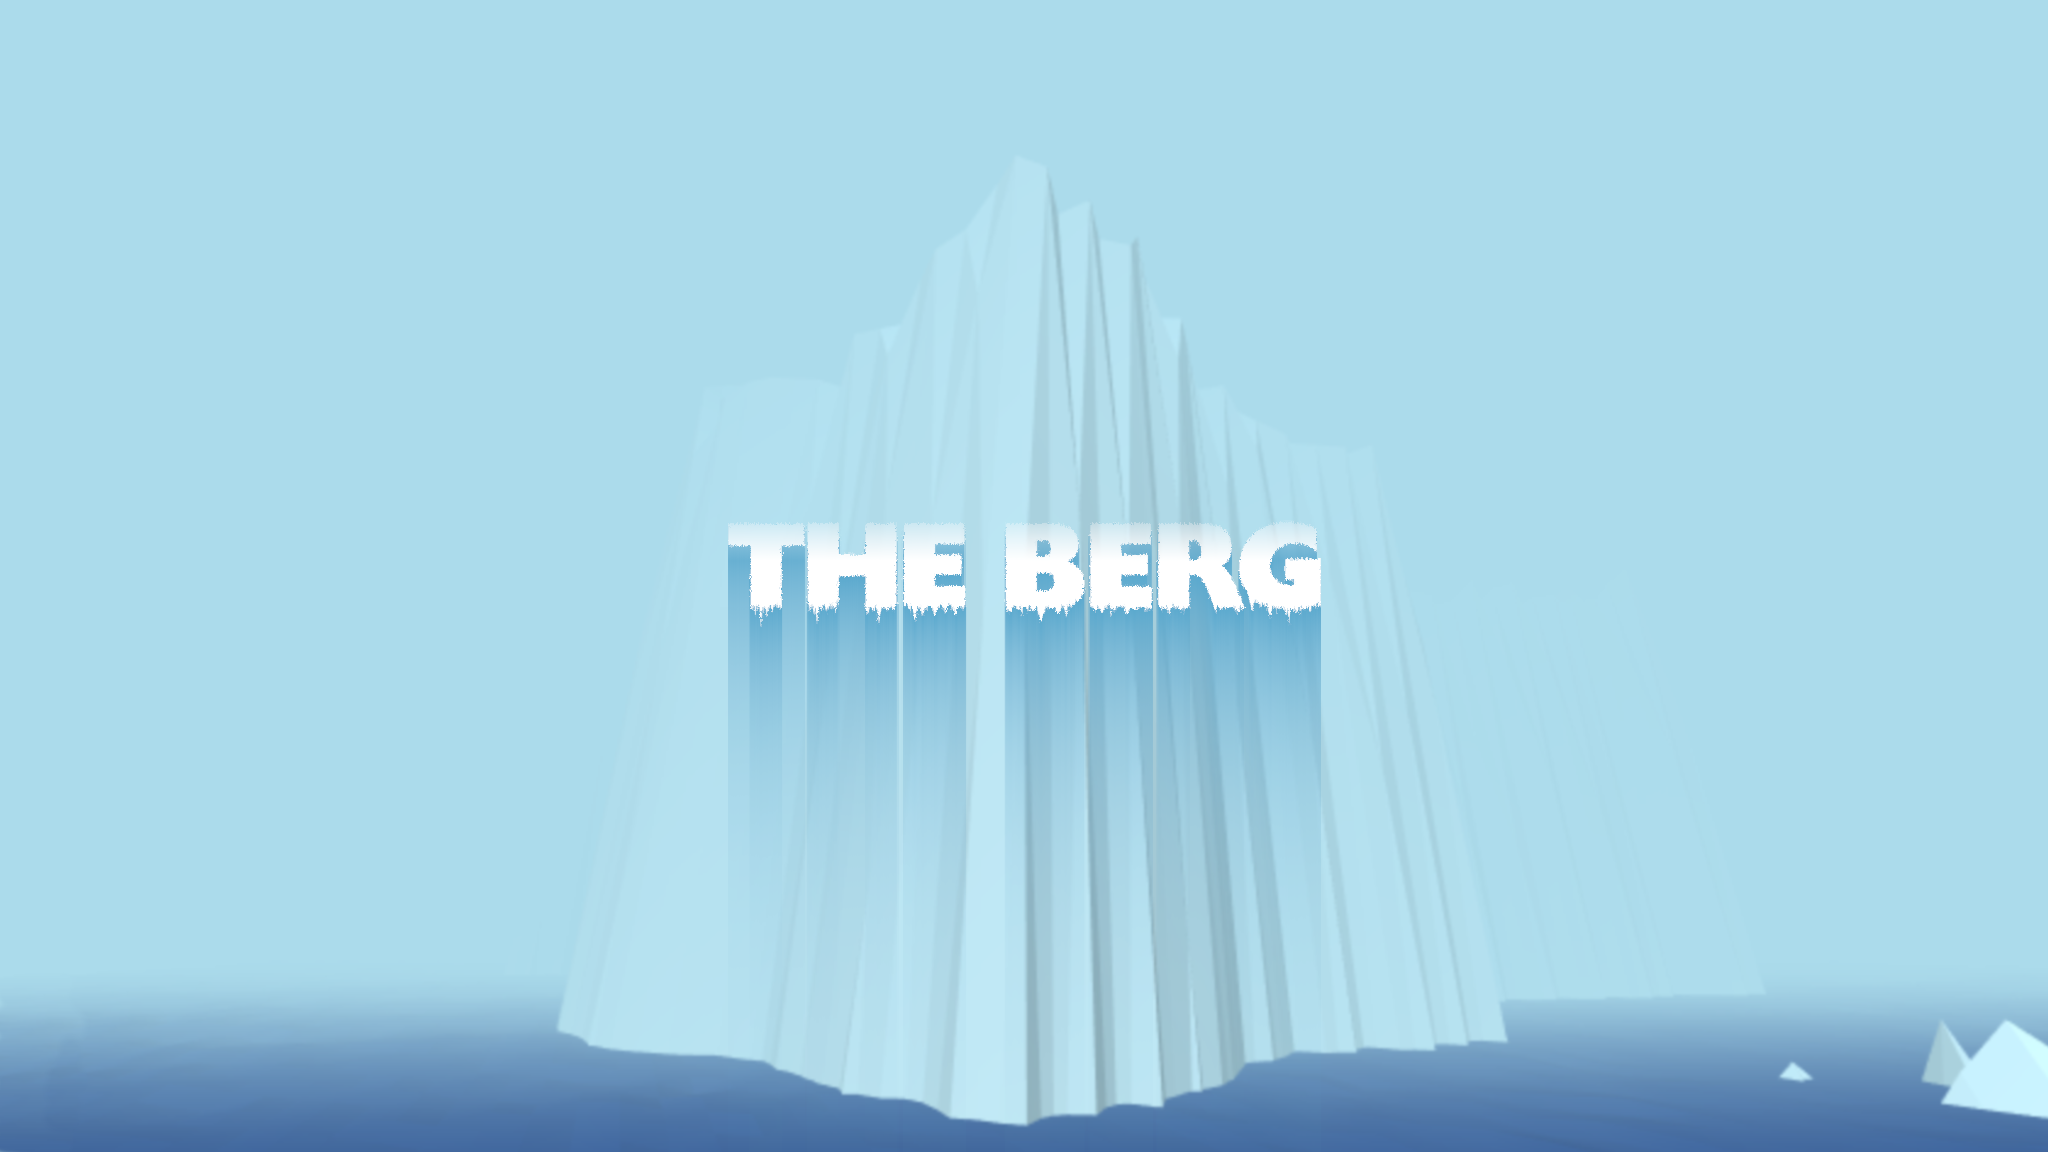 Into The Berg